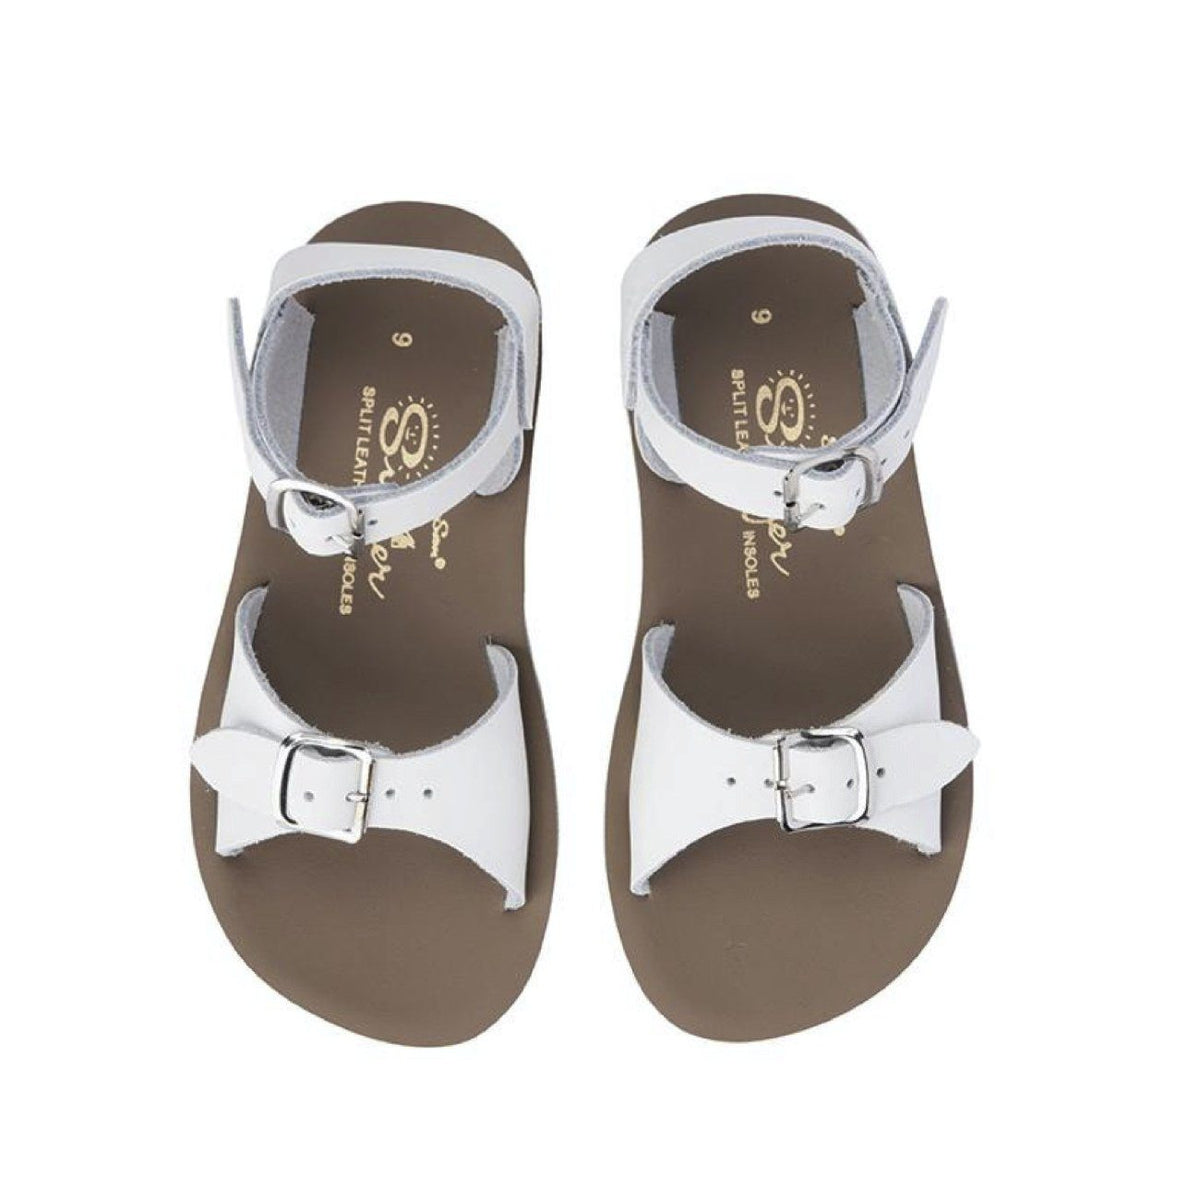 Salt Water Sandals, Sun-San Surfer, Infant, White Sandals Salt Water Sandals White Infant 5 